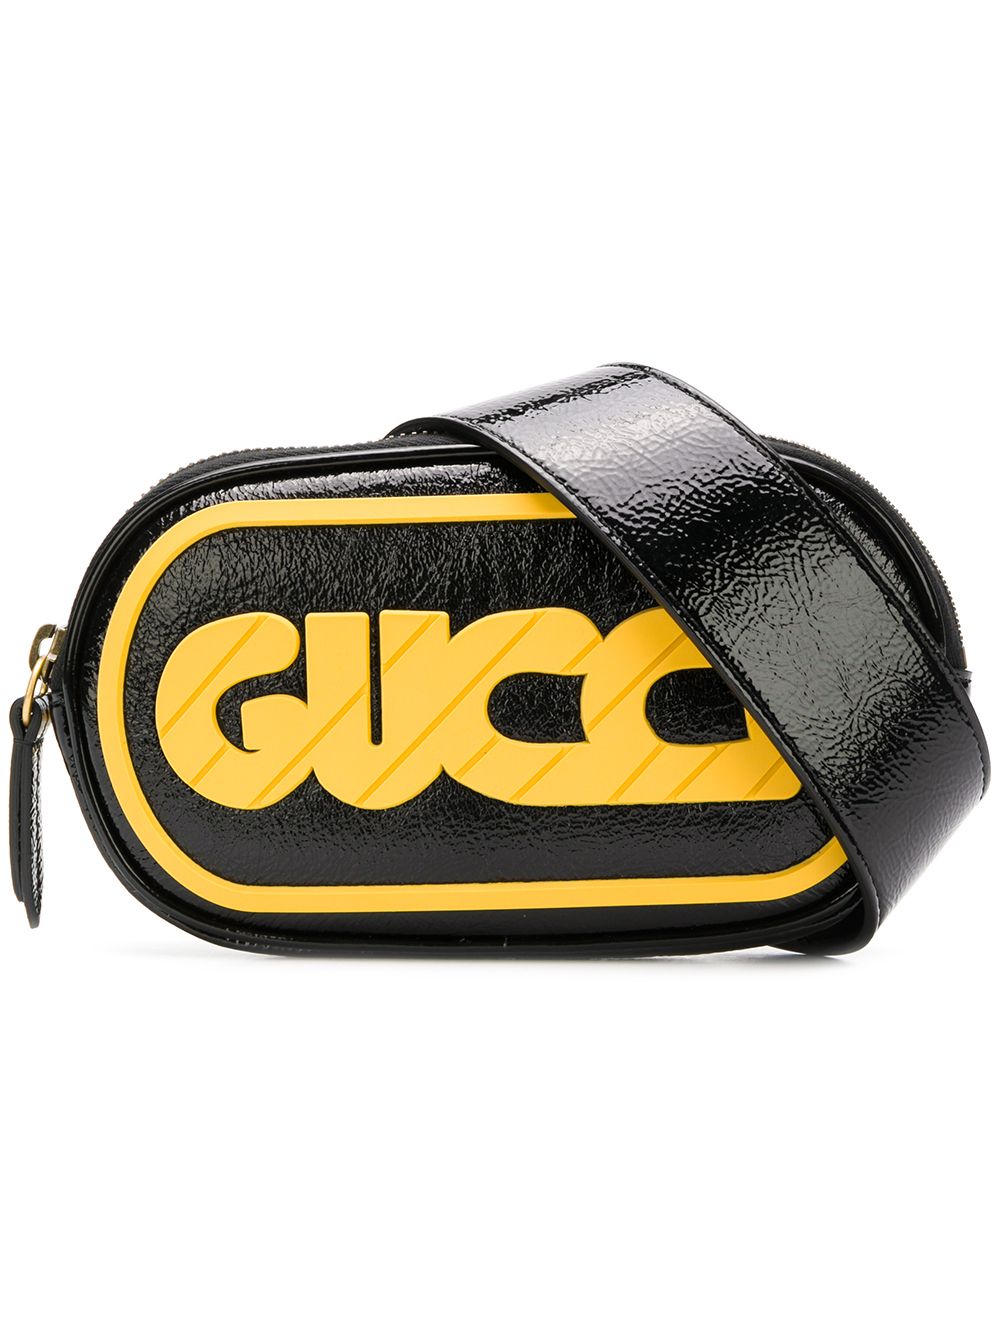 gucci yellow belt bag